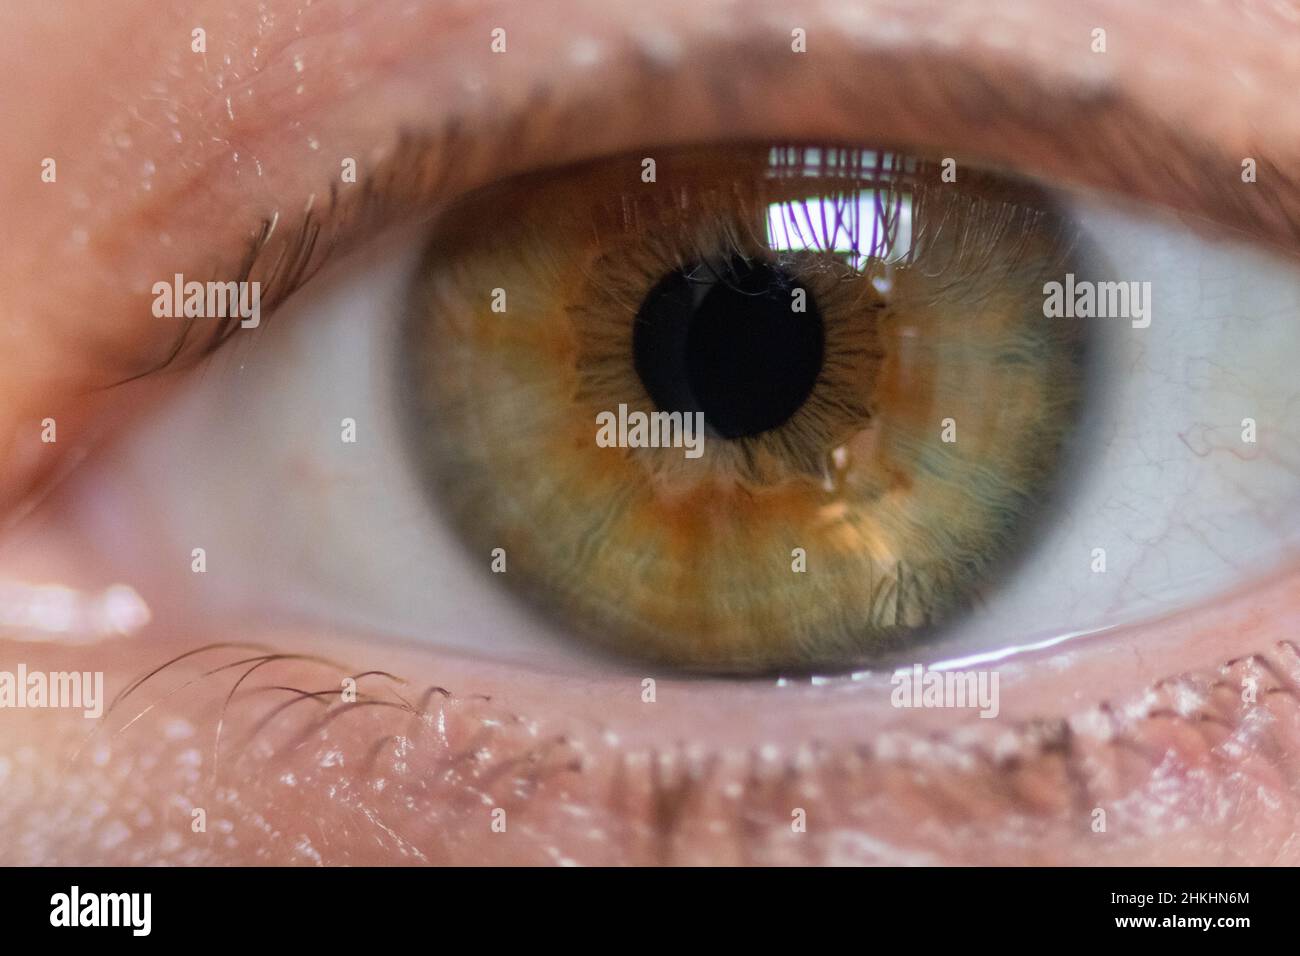 Ojos verdes iris fotografías e imágenes de alta resolución - Alamy